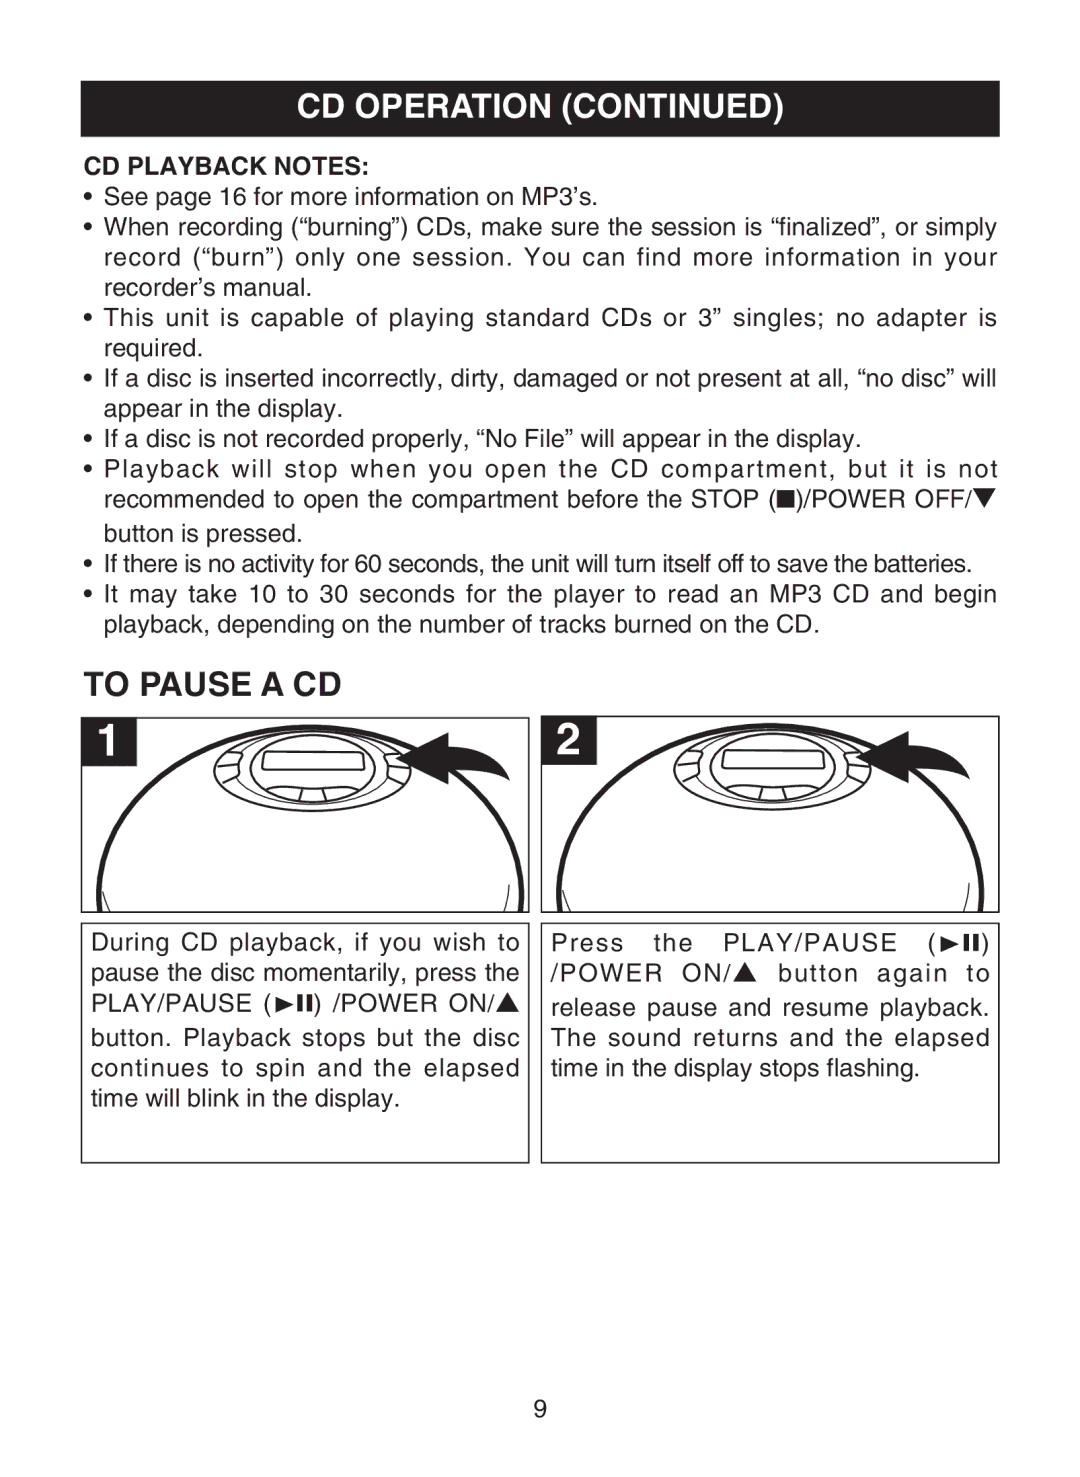 Memorex MPD8812 manual To Pause a CD, CD Playback Notes 